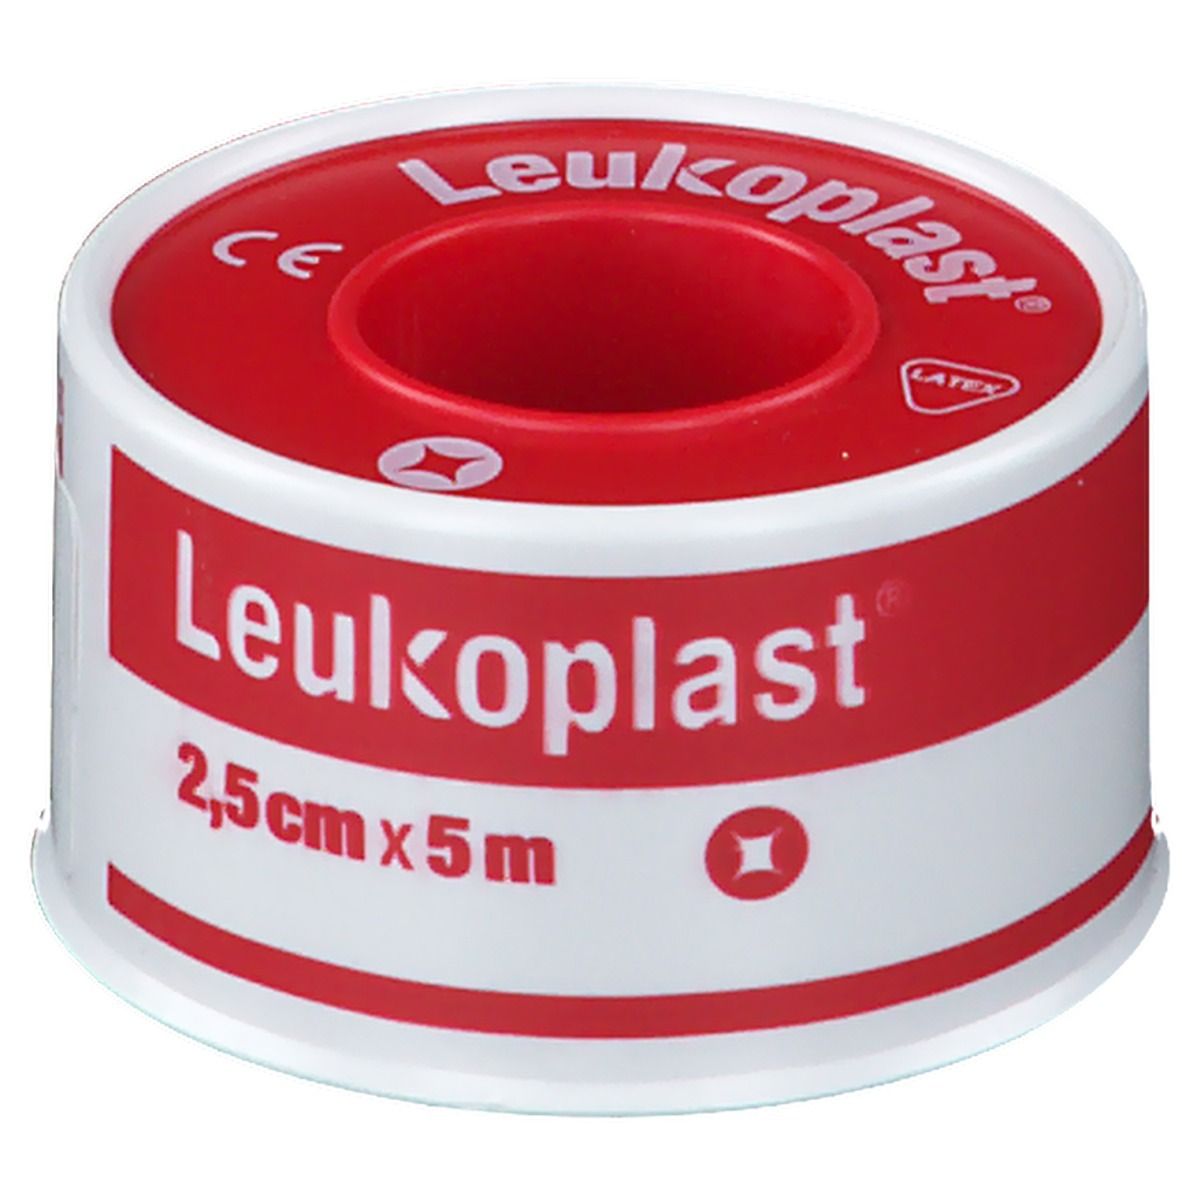 Leukoplast® 2,5 cm x 5 m